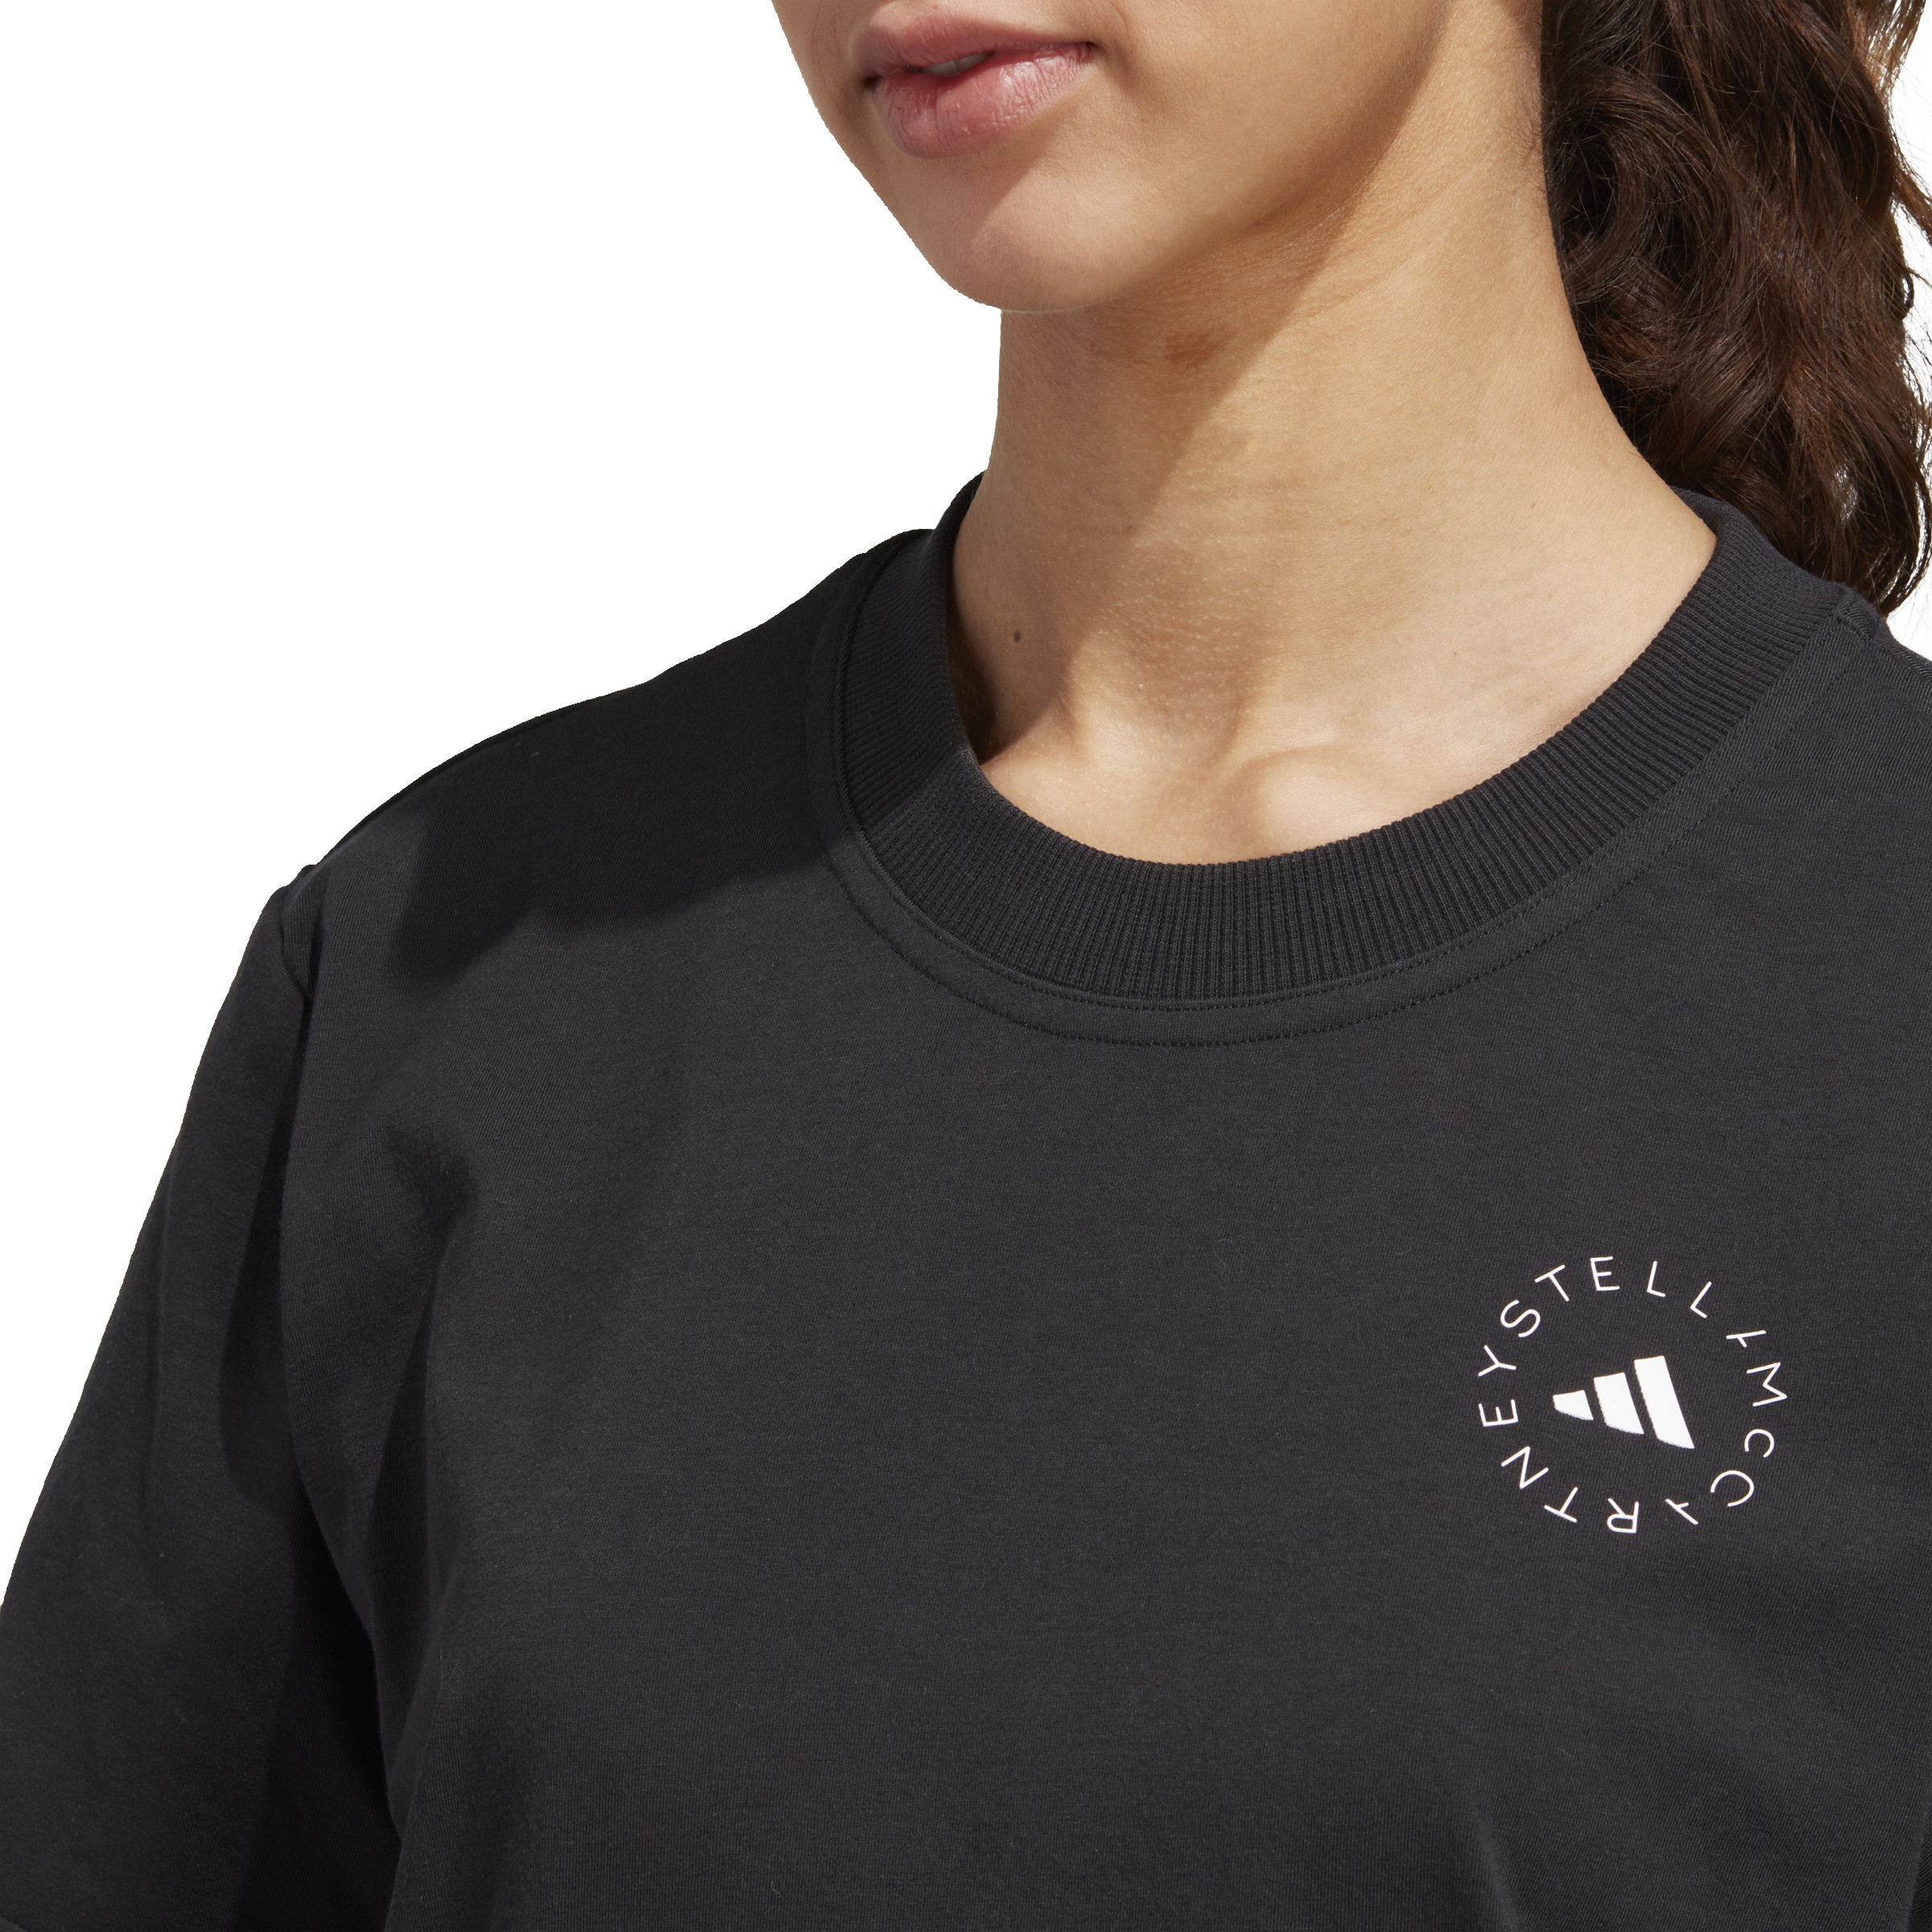 Adidas by Stella McCartney - TrueCasuals Regular Sportswear T-Shirt, Black, large image number 4